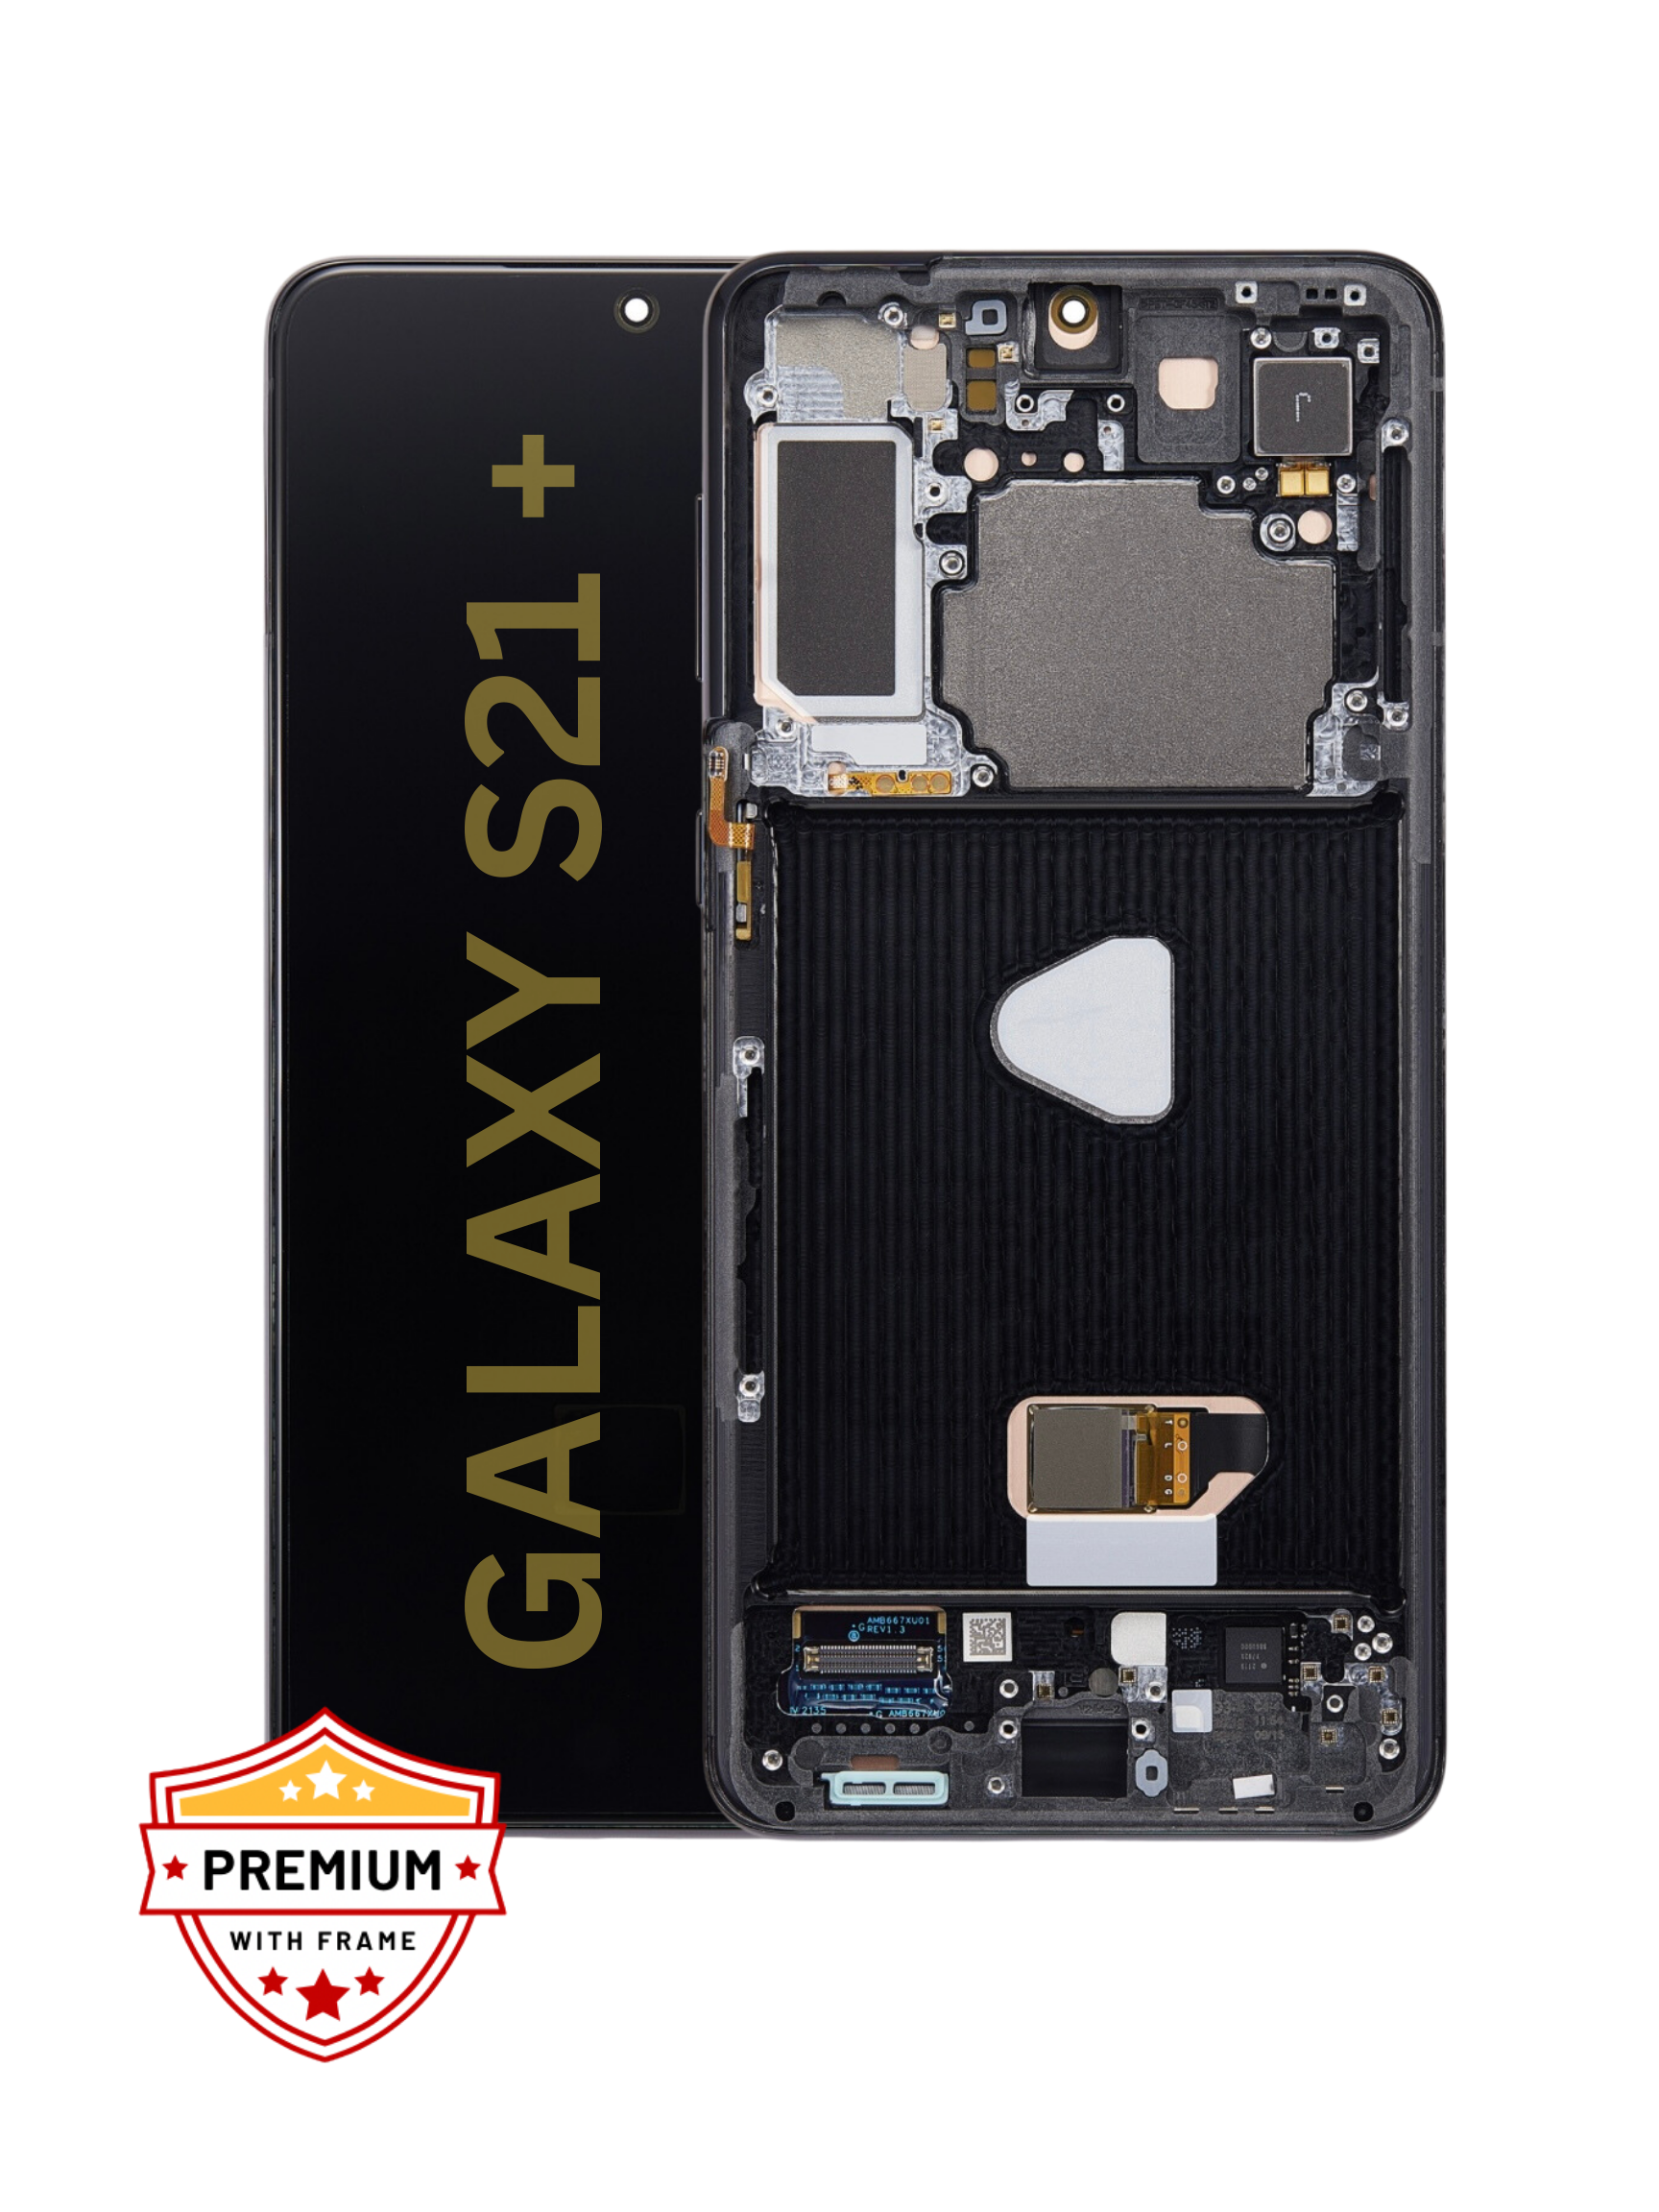 (Refurbished) Samsung Galaxy S21 Plus OLED Display with Frame (Black)